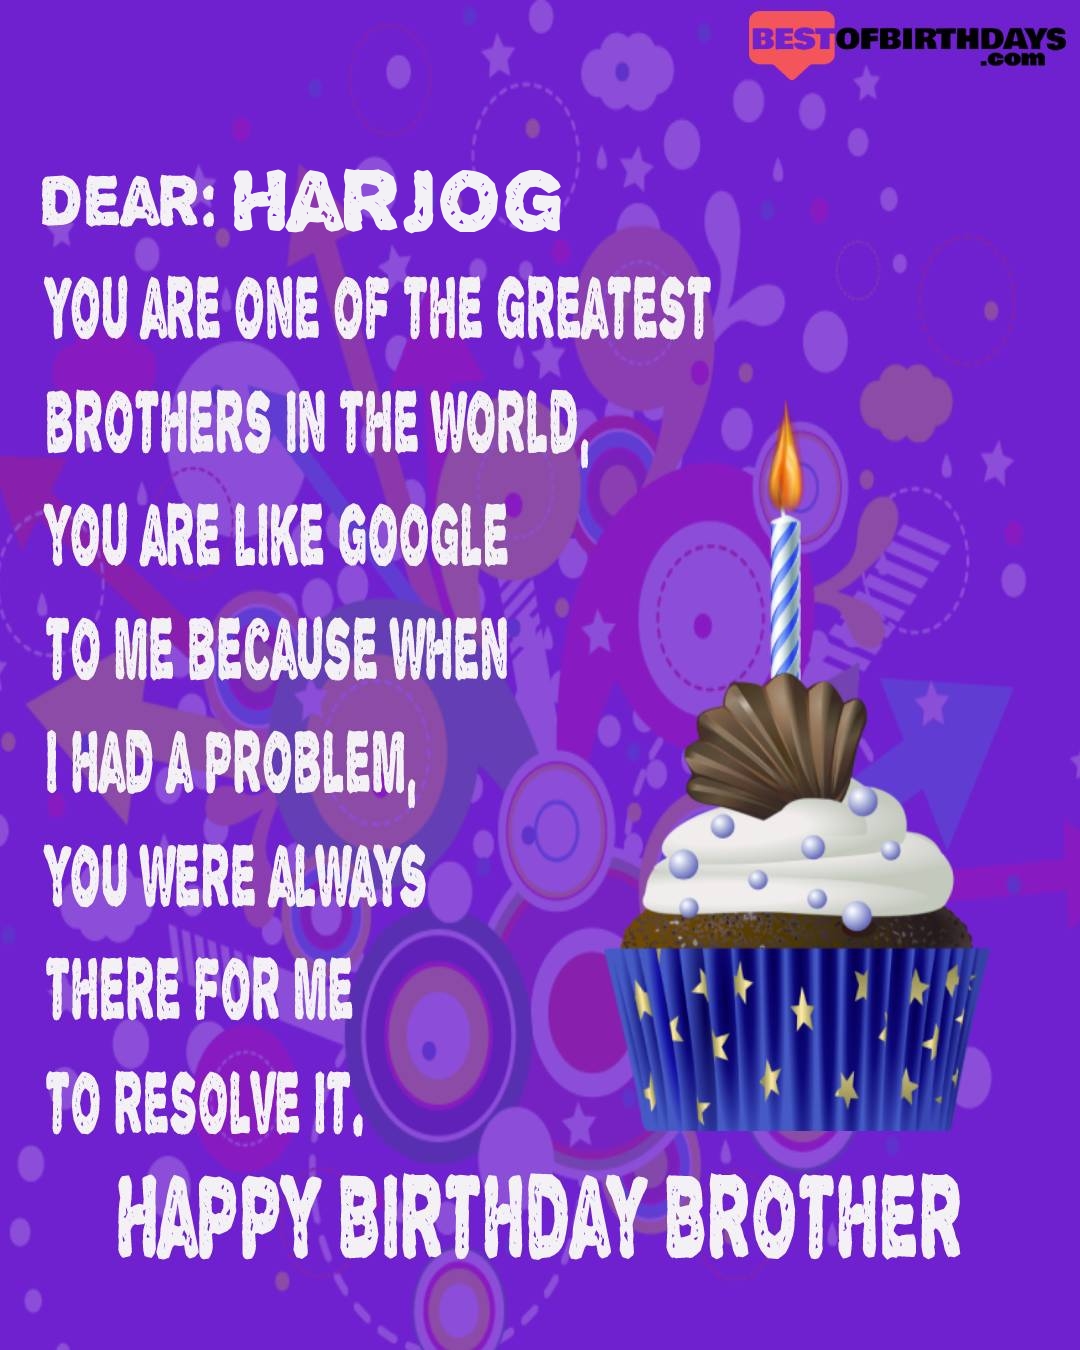 Happy birthday harjog bhai brother bro